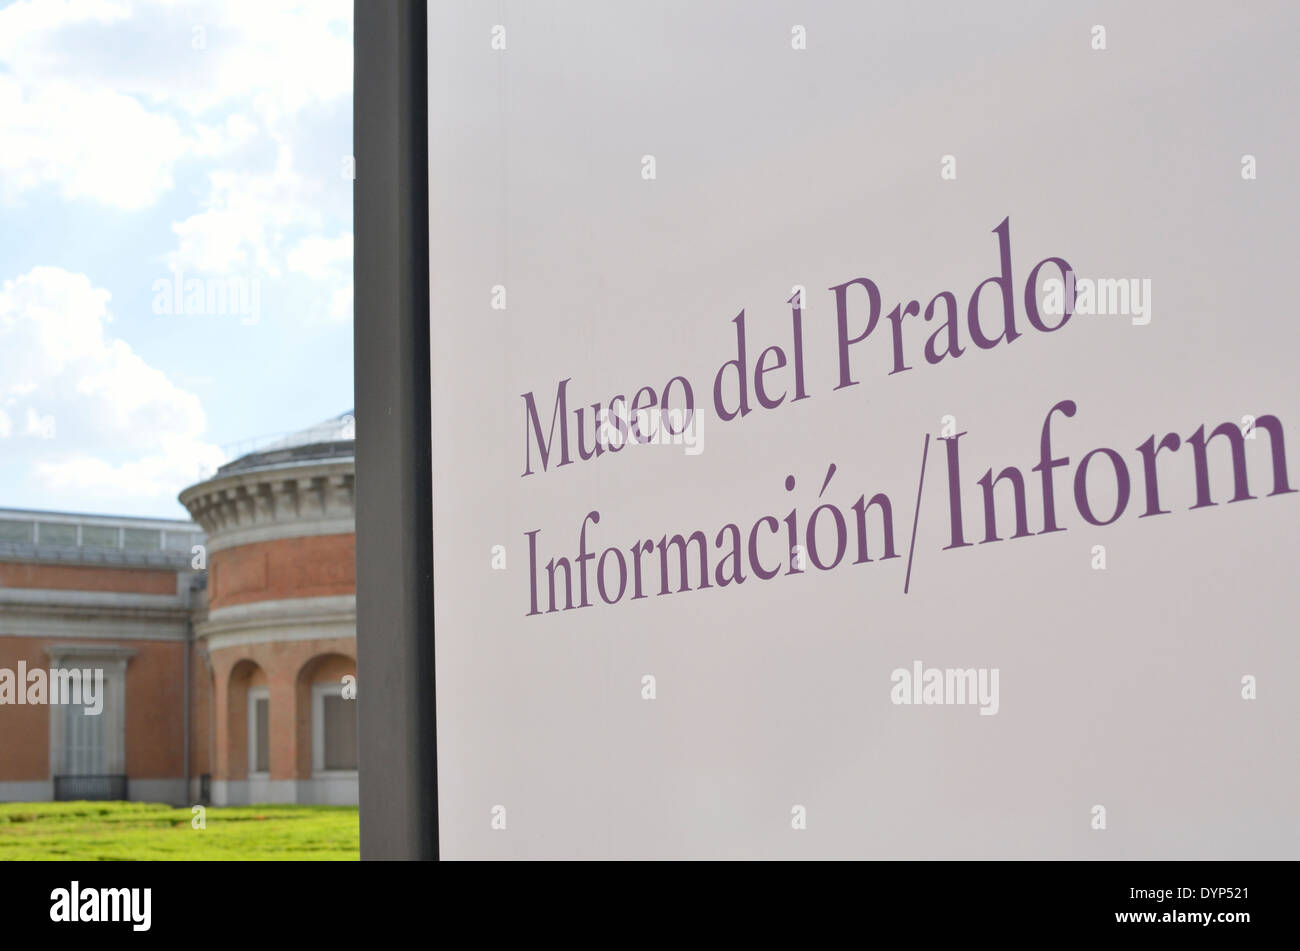 Museo del Prado (Prado Museum) Information Sign, Madrid Spain Stock Photo